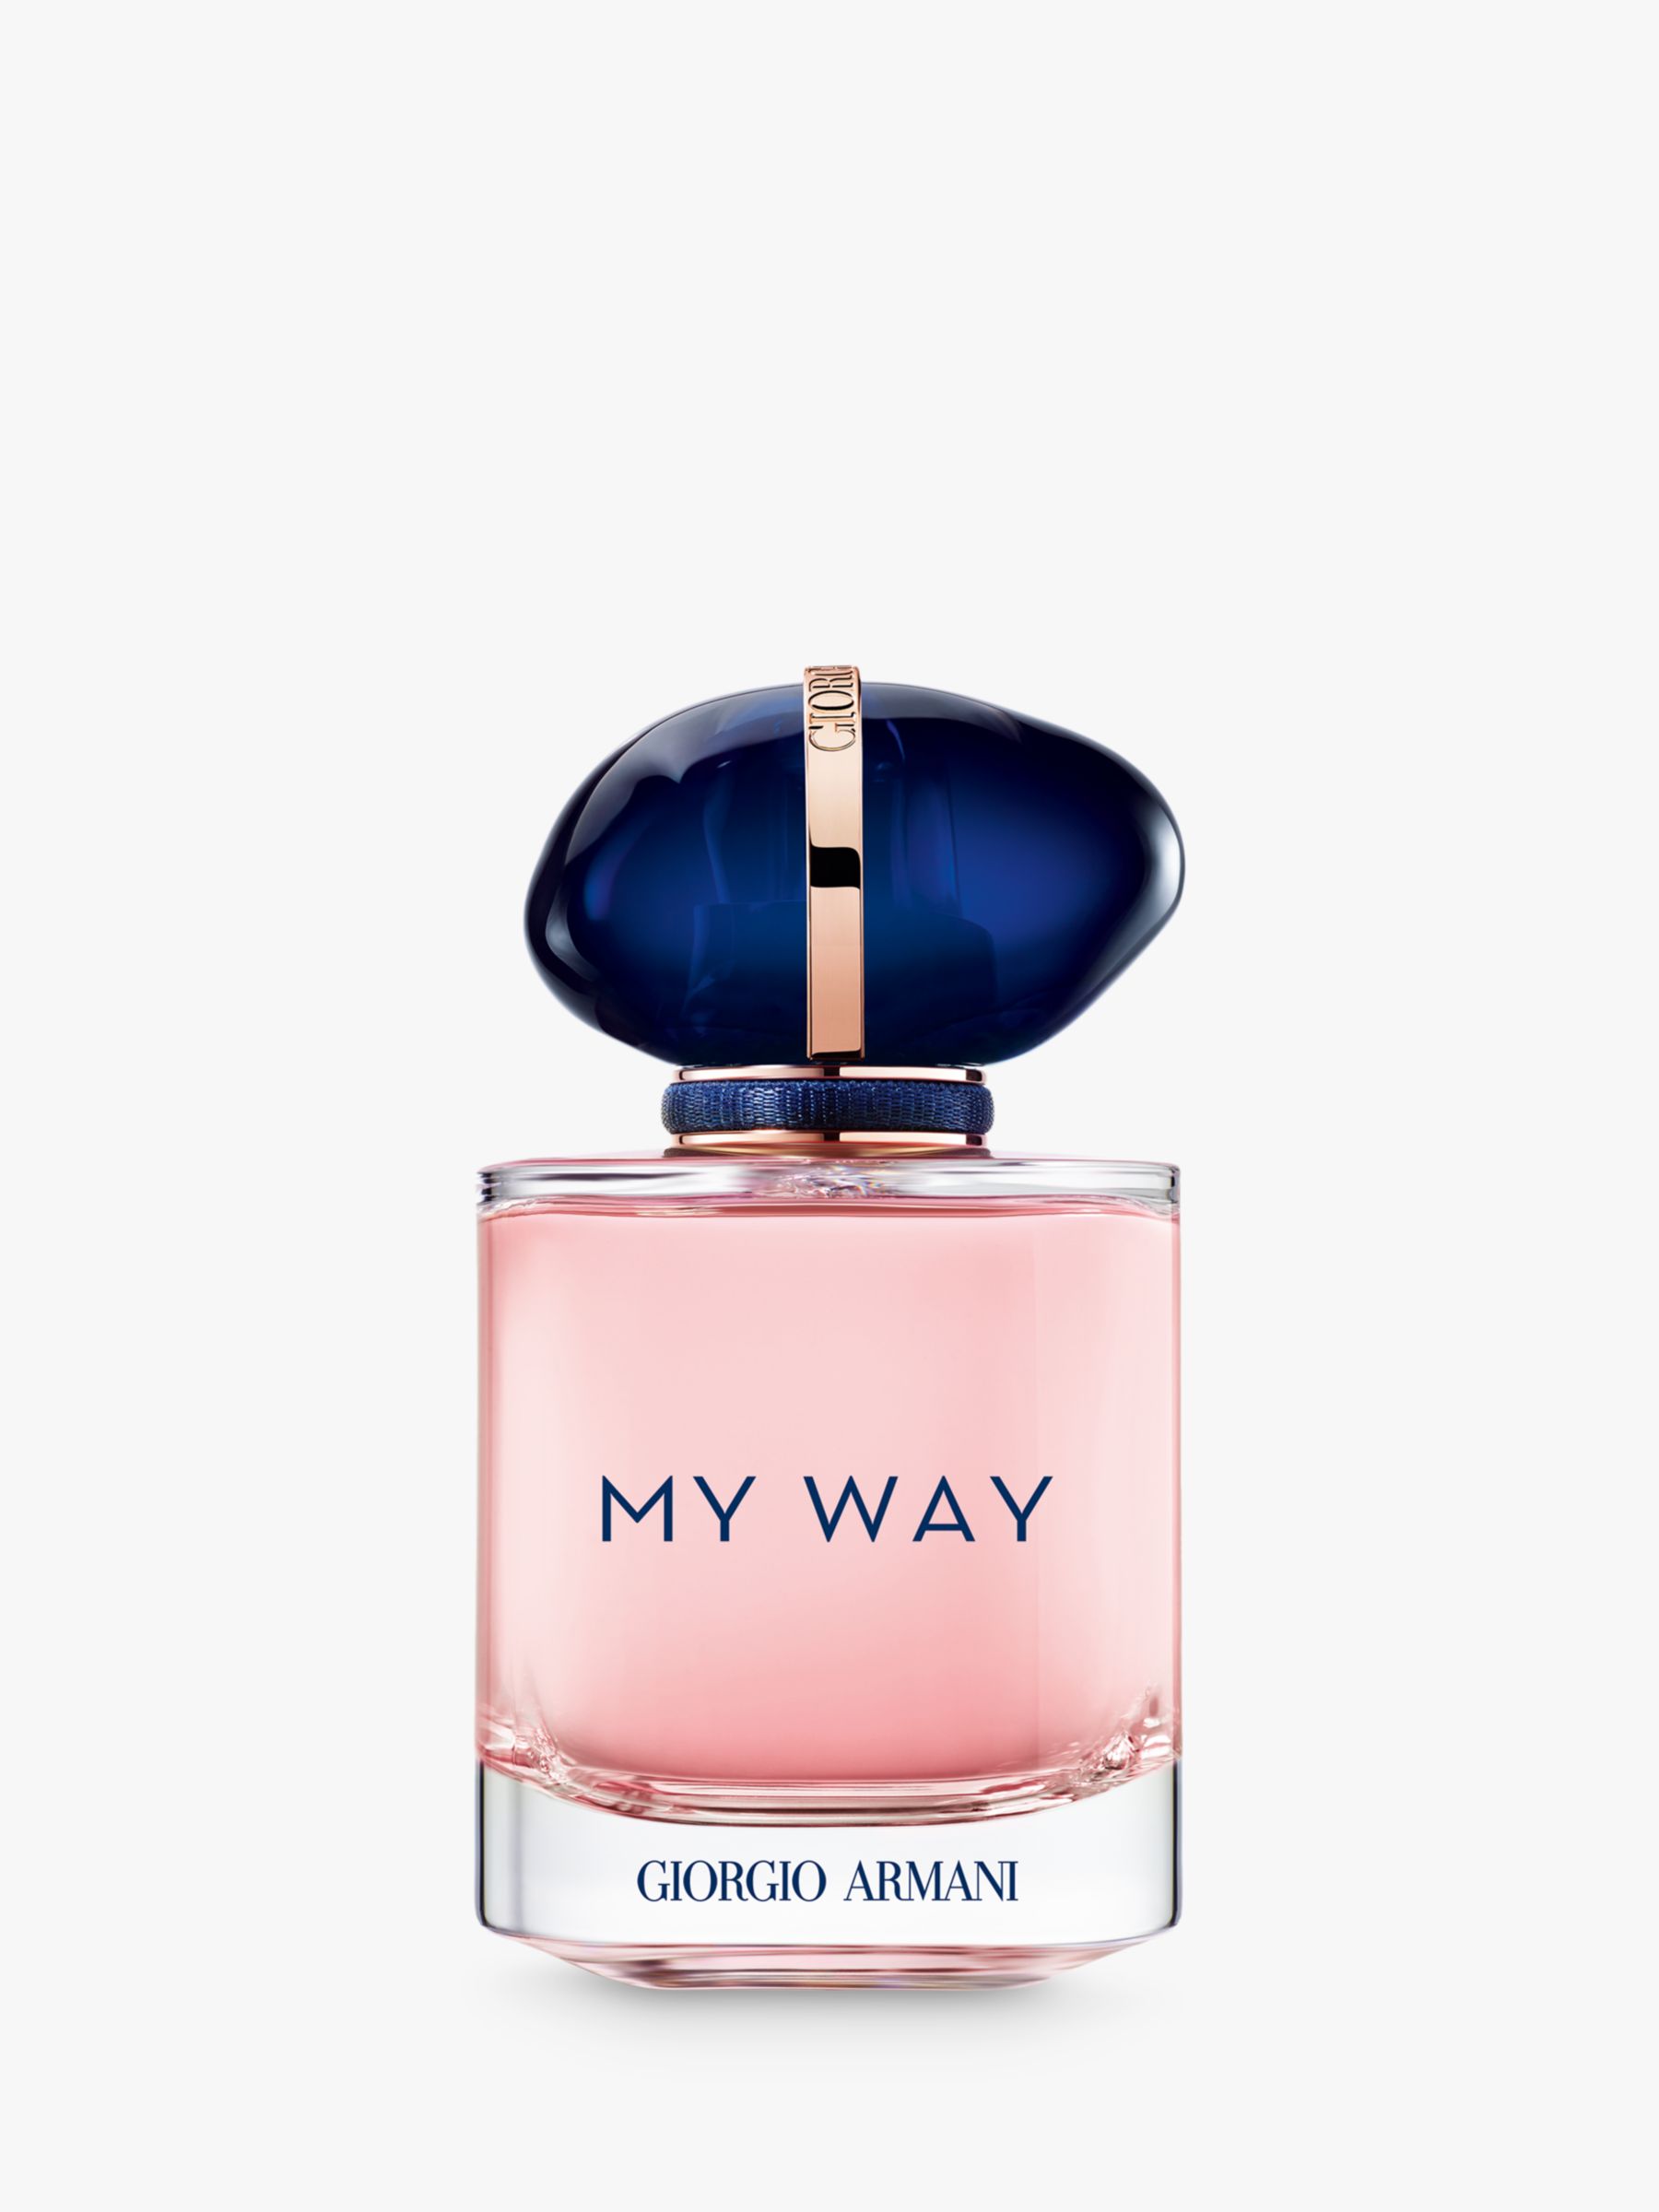 Giorgio Armani My Way Eau de Parfum Refillable, 30ml at John Lewis &  Partners